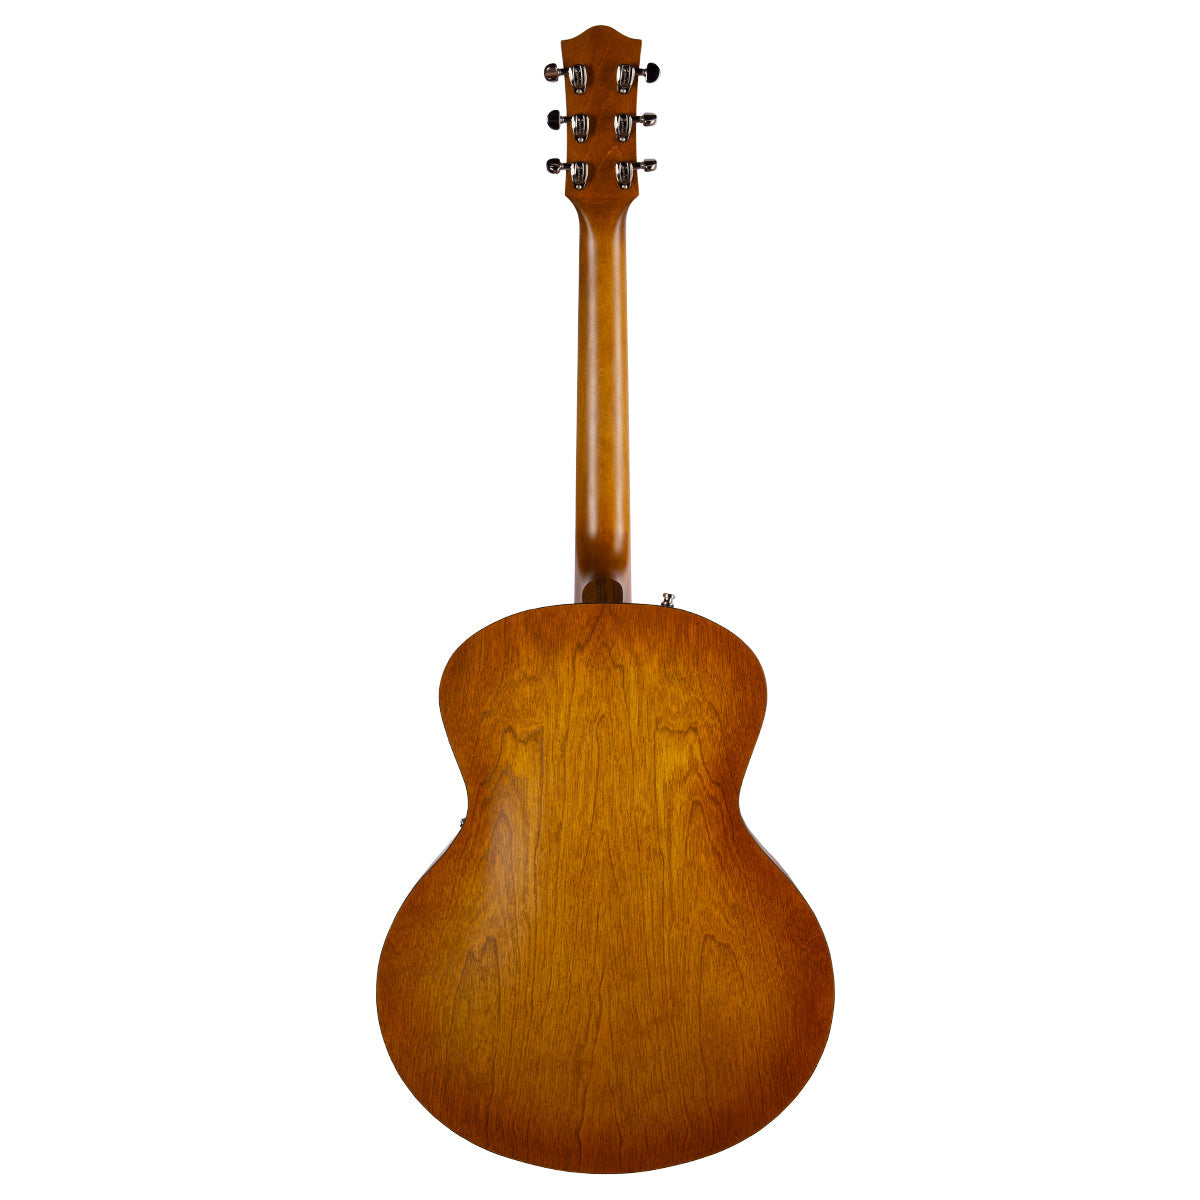 Godin 5th Avenue Jumbo P90 Semi-Acoustic Guitar ~ Harvest Gold, Electric Guitar for sale at Richards Guitars.